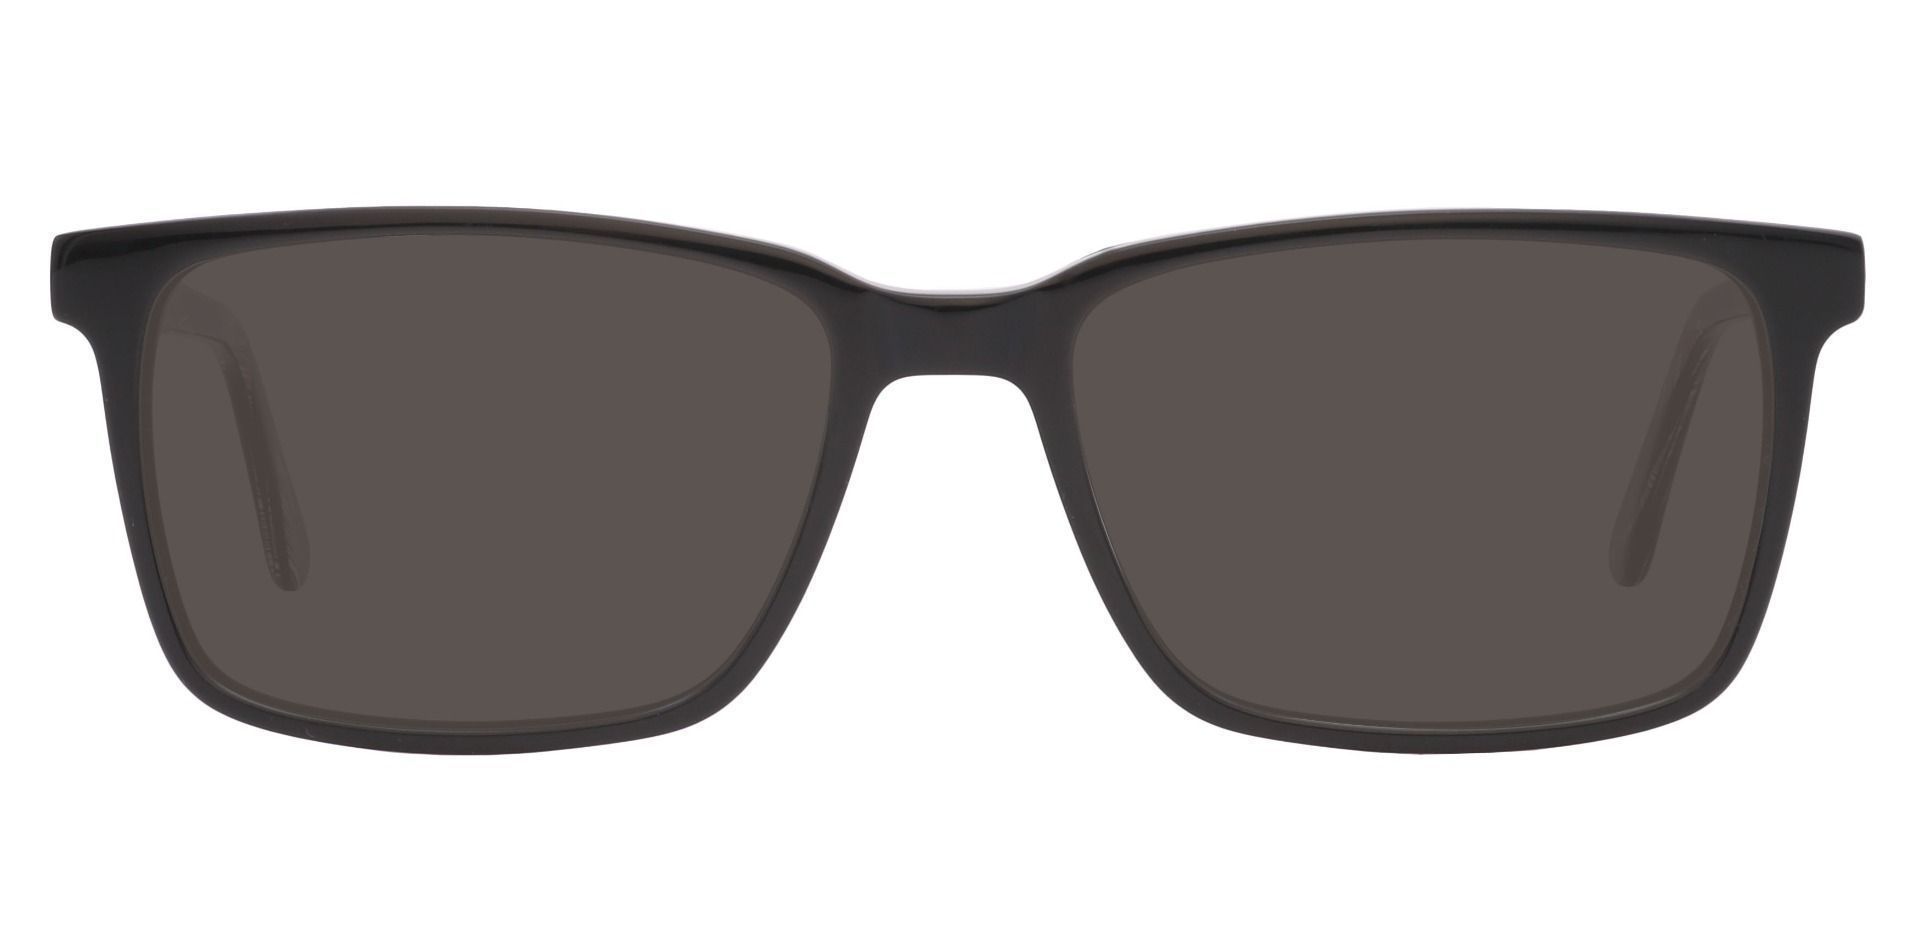 Venice Rectangle Prescription Sunglasses - Black Frame With Gray Lenses